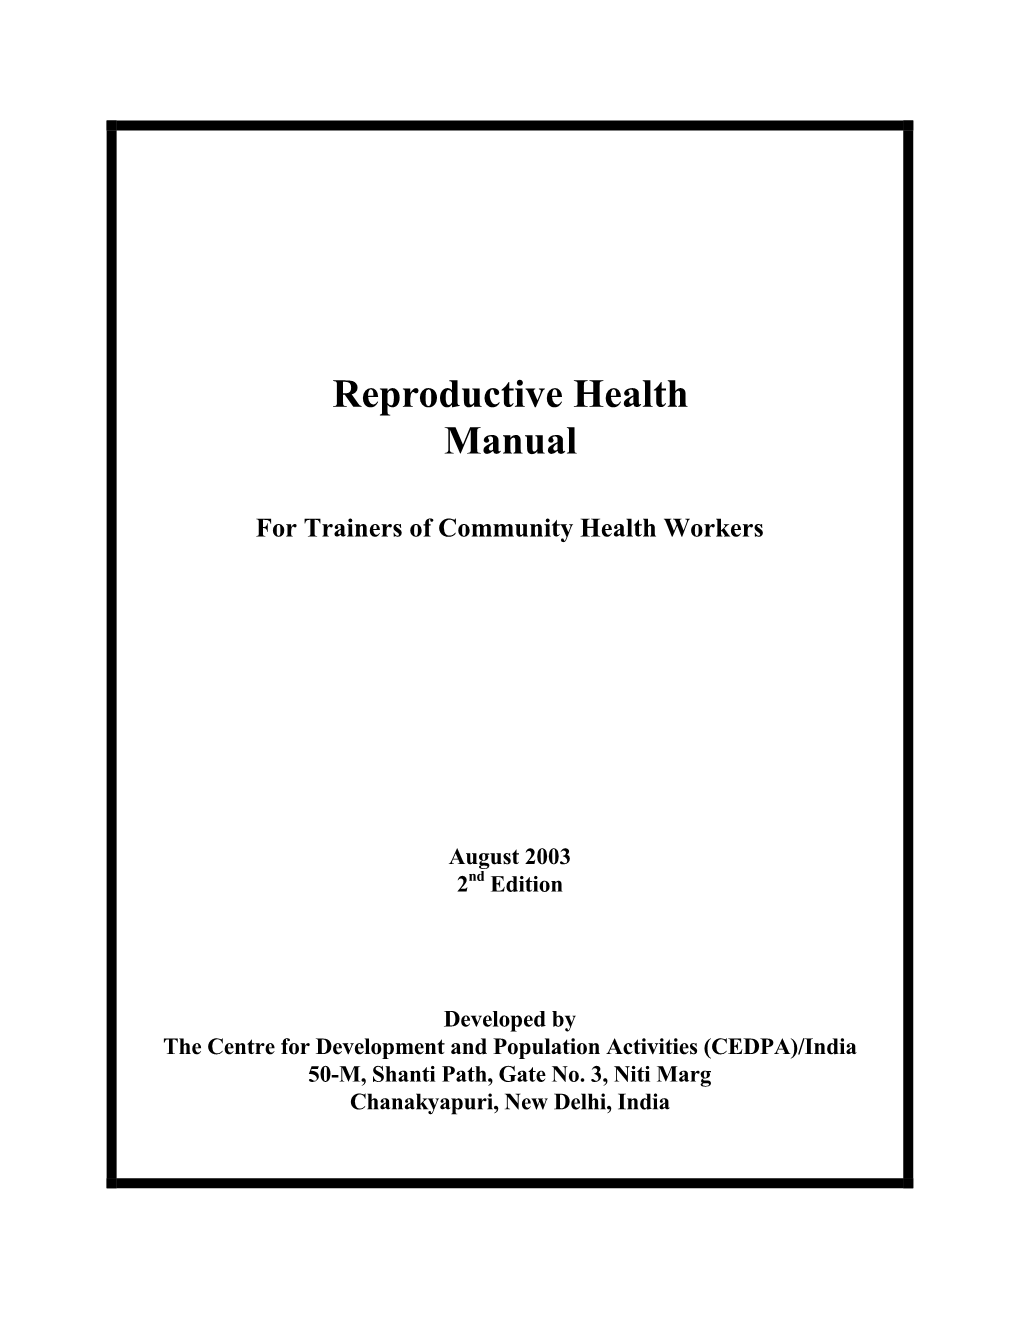 Reproductive Health Manual